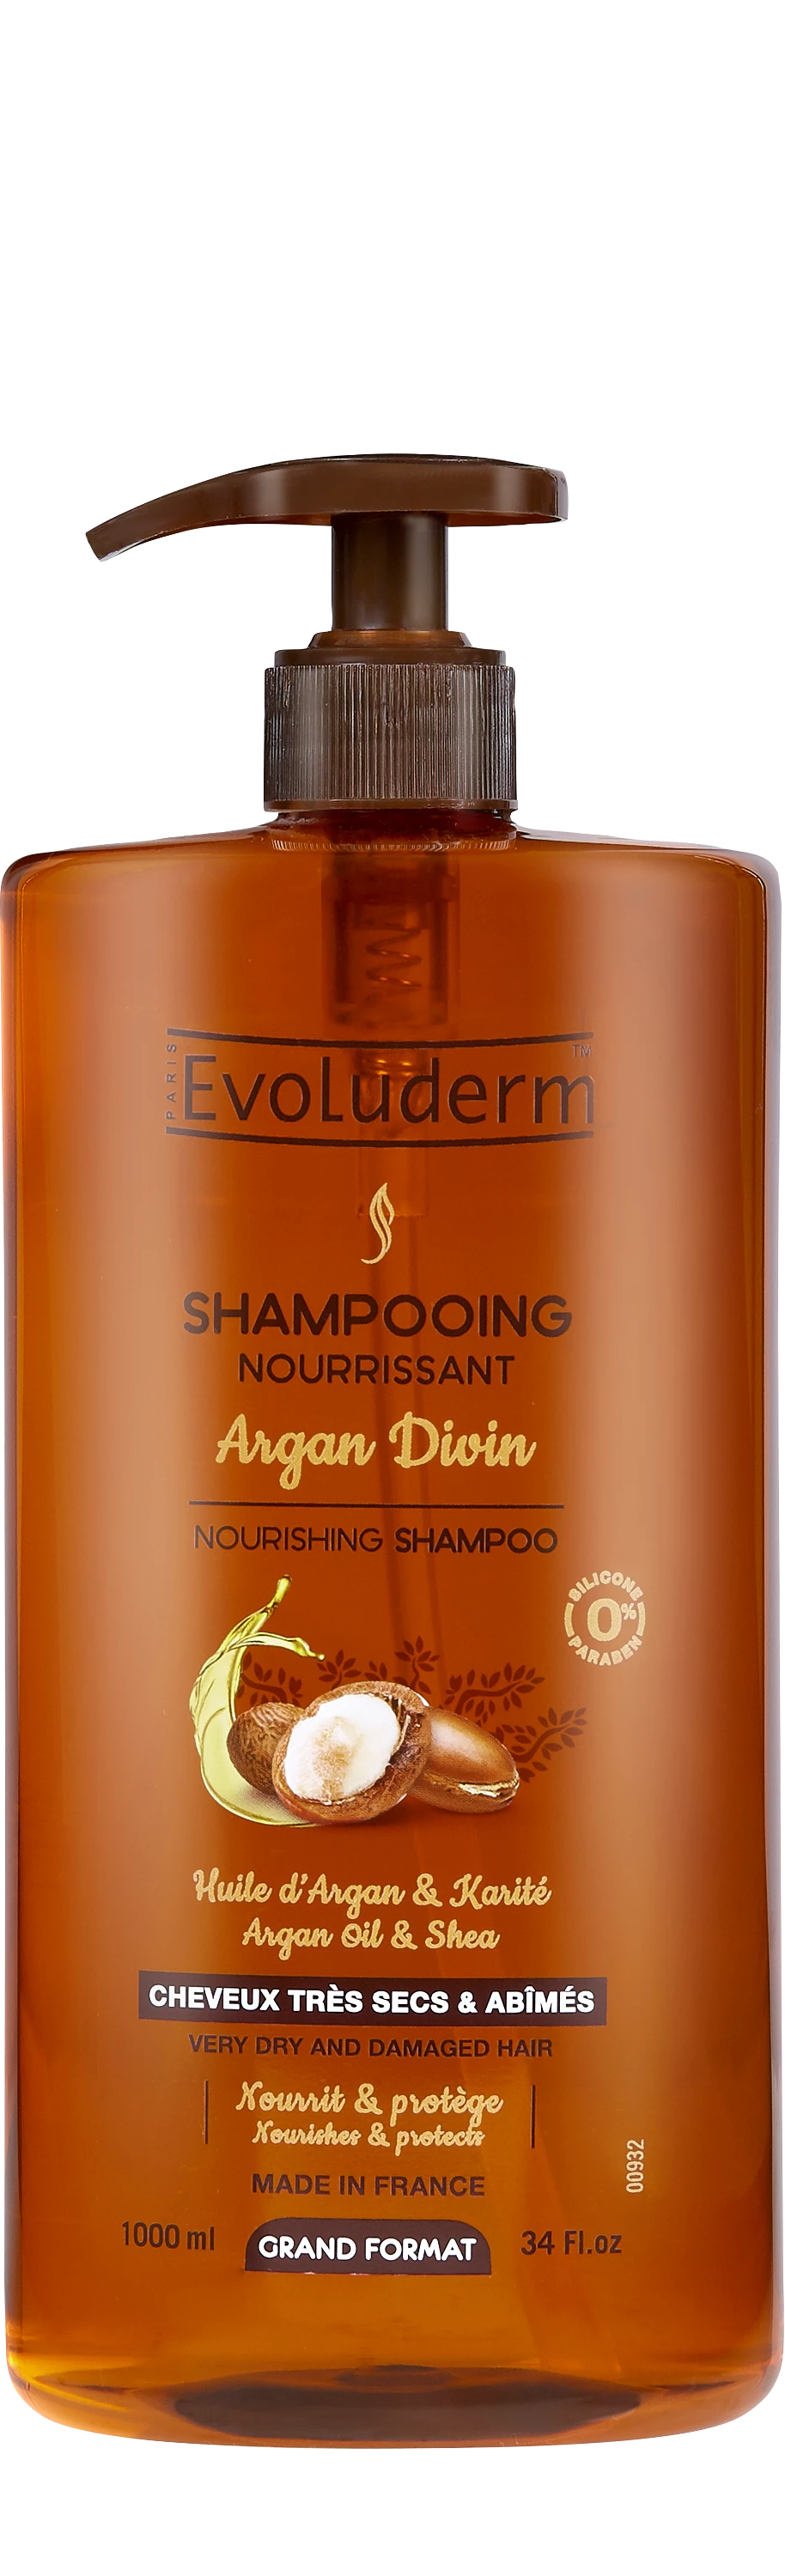 Shampooing Nourrissant Argan Divin, 1L - EVOLUDERM